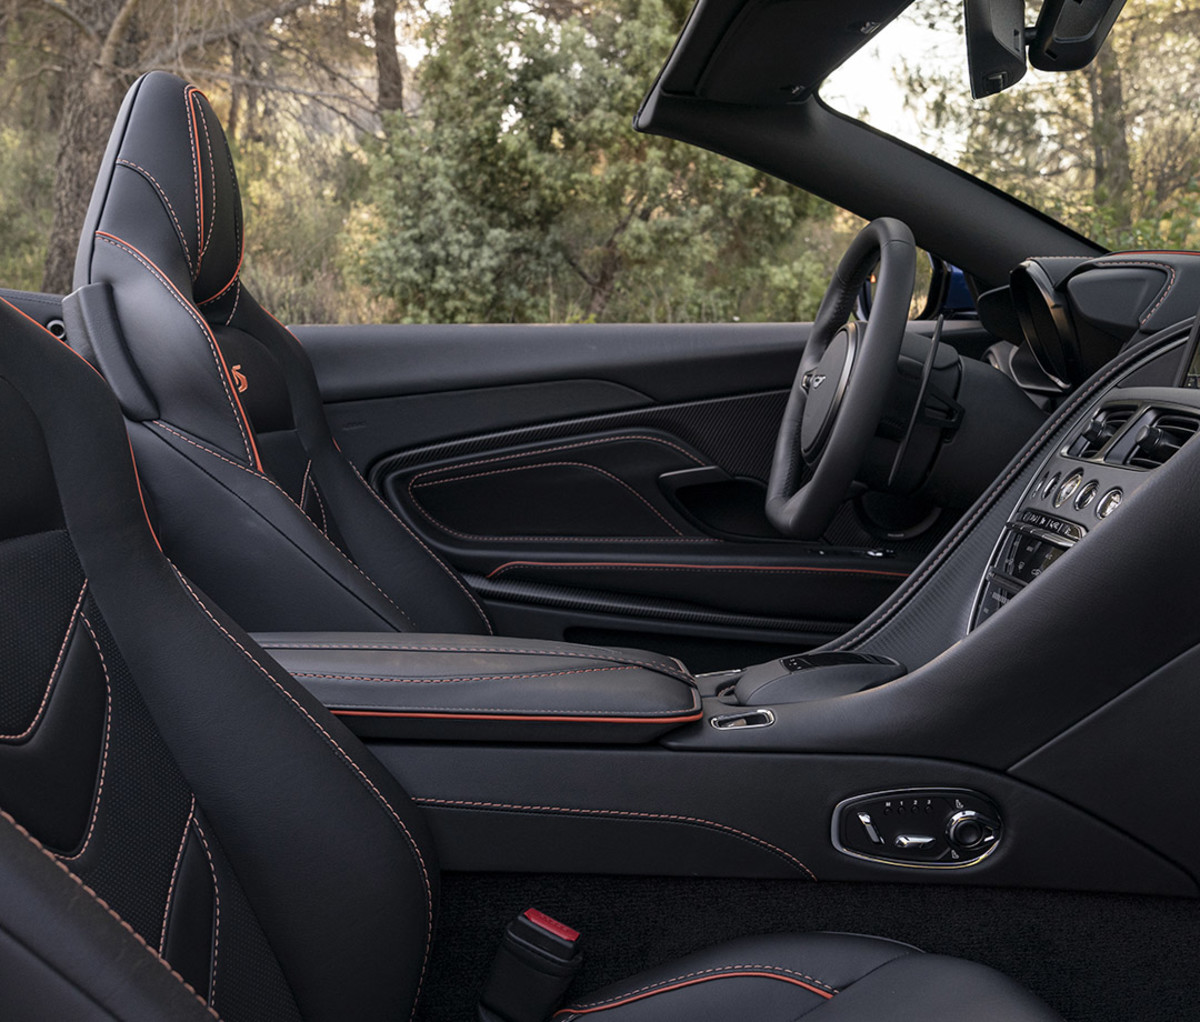 The interior of the 2020 DBS Superleggera Volante from Aston Martin